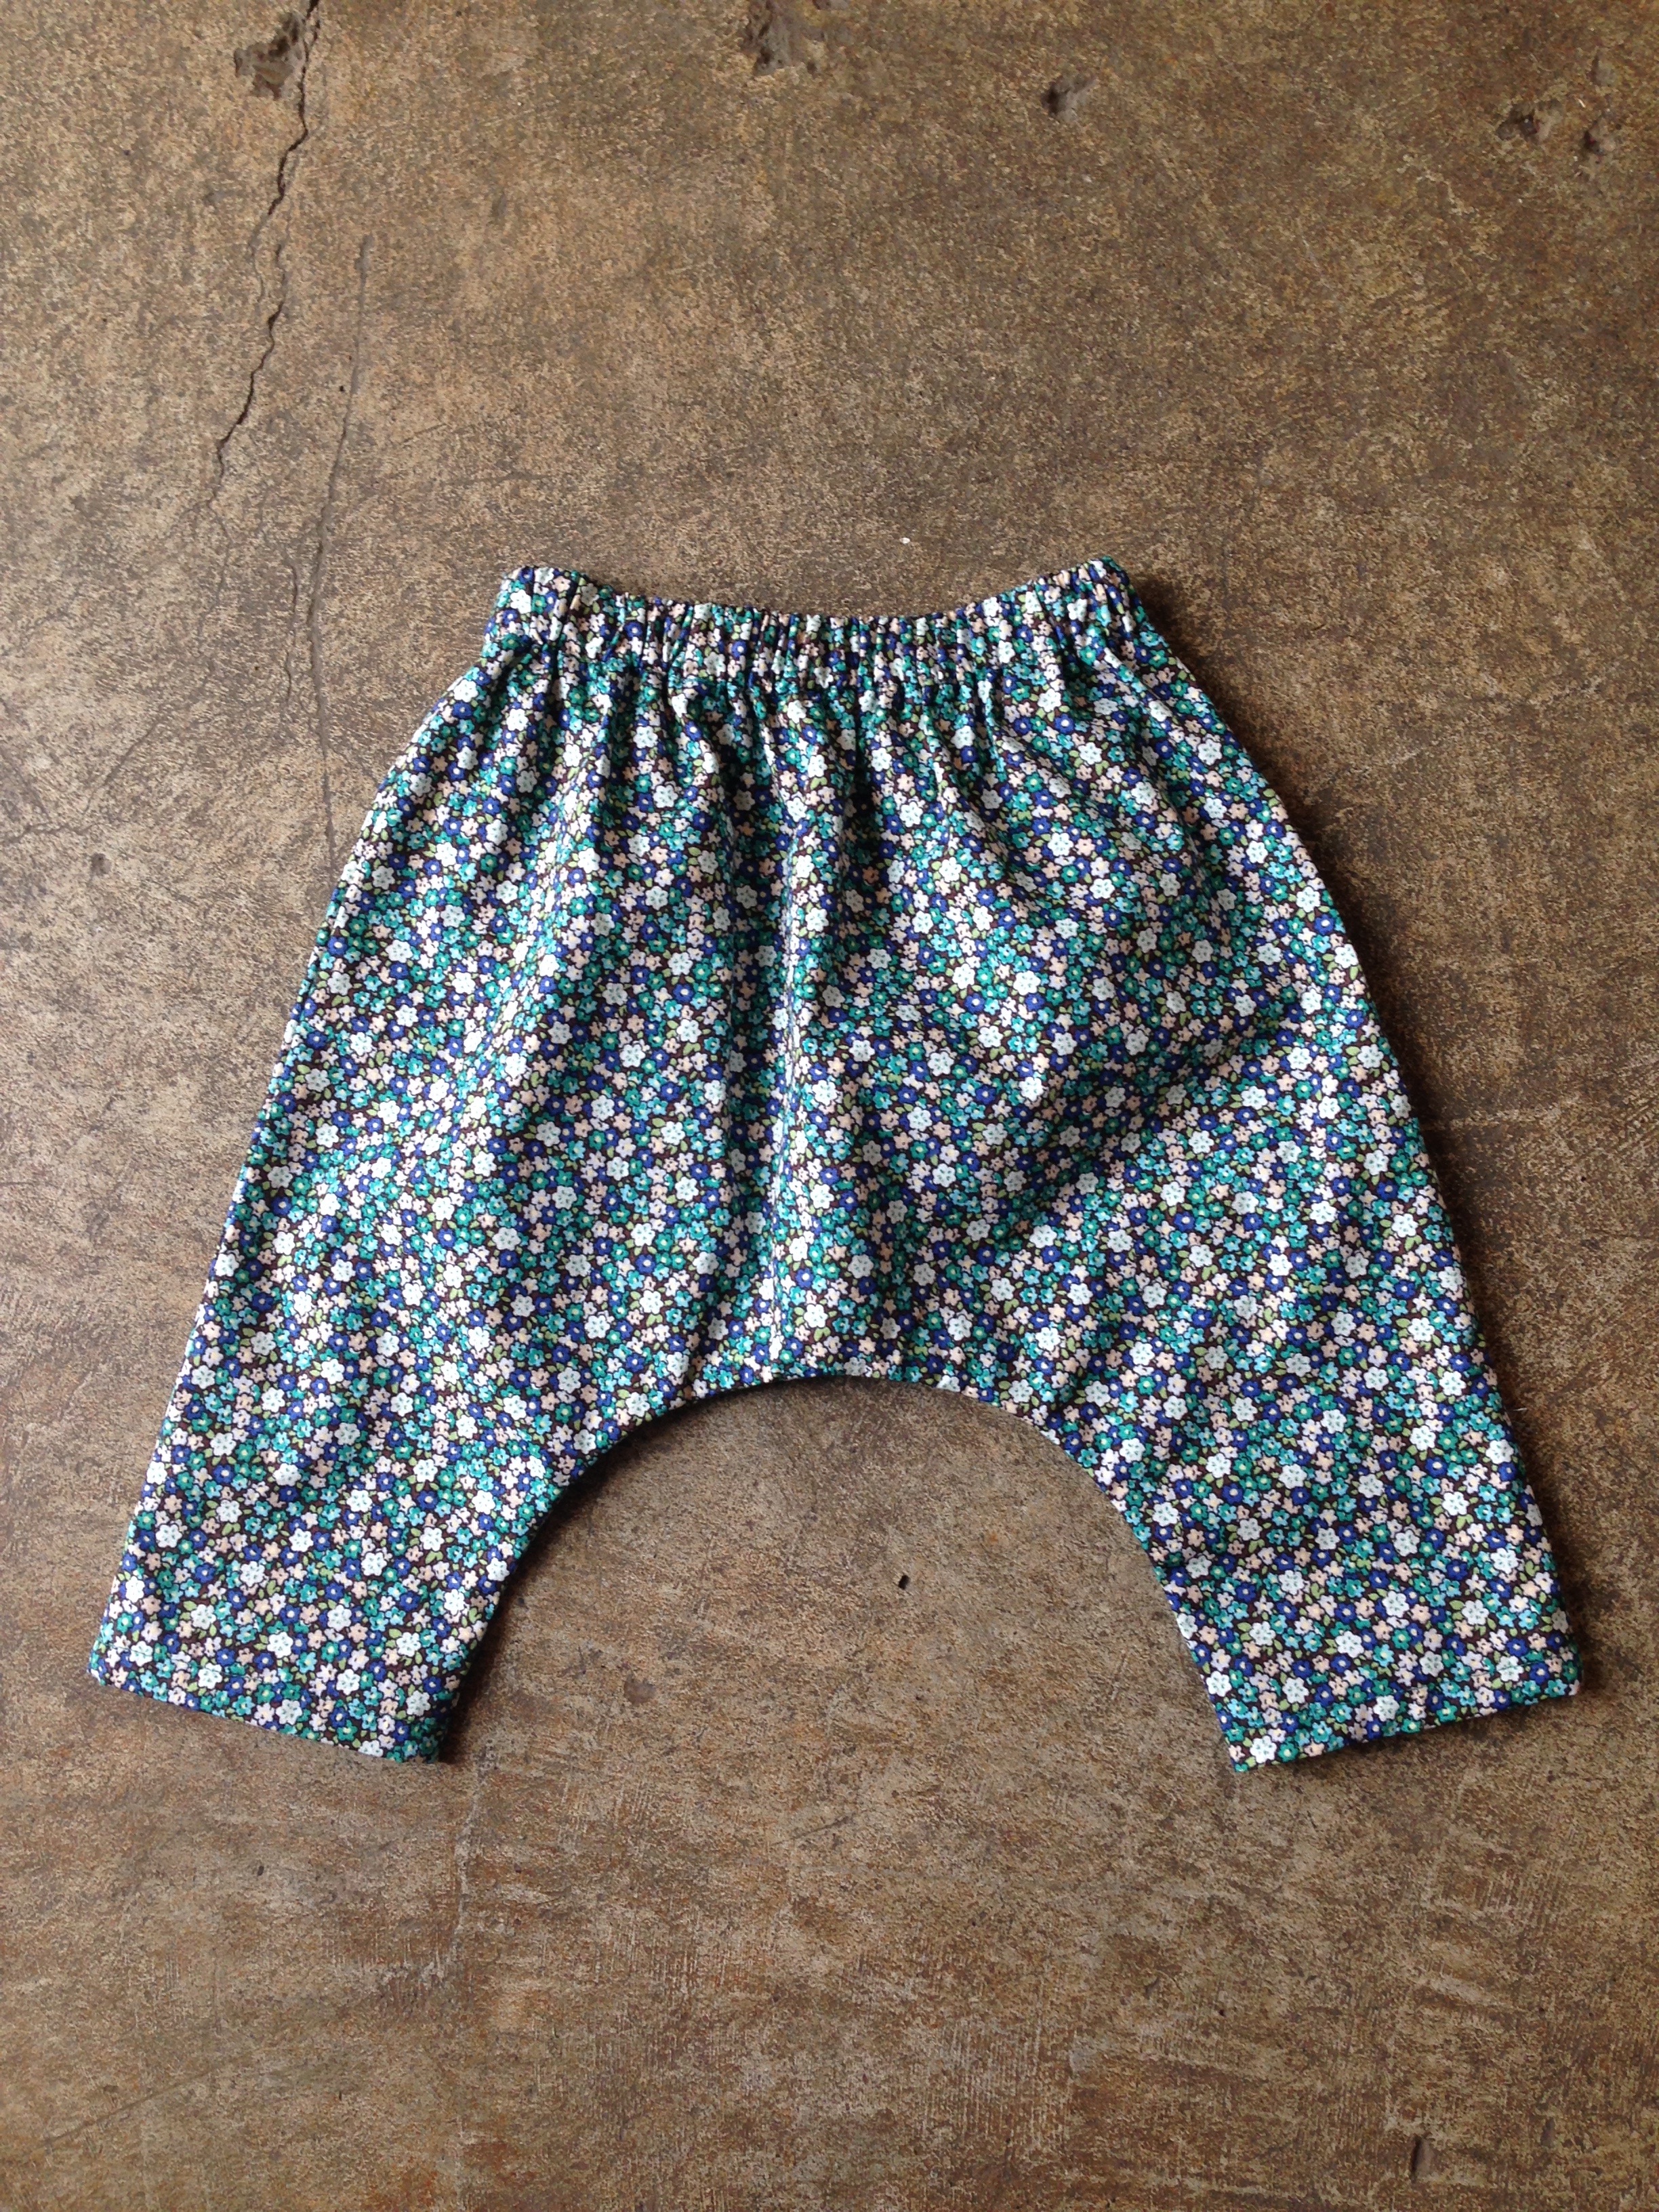 DIY toddler harem pants via OhEverythingHandmade